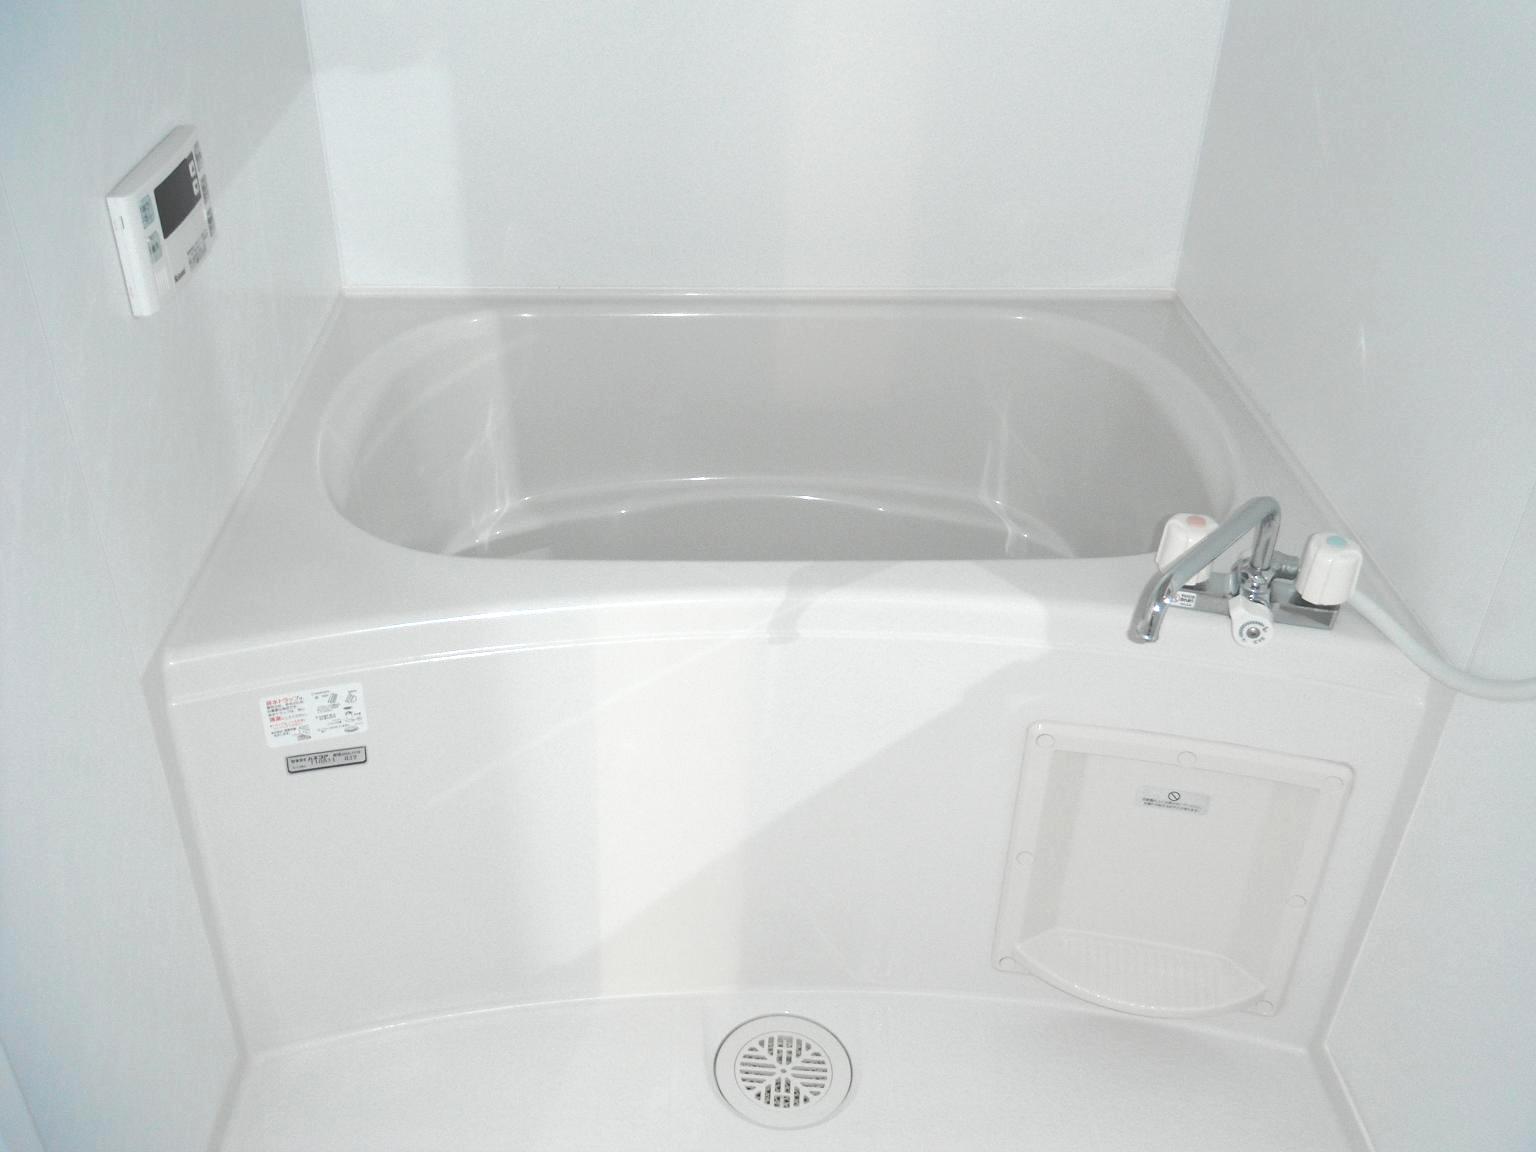 Bath. With reheating function & bathroom dryer